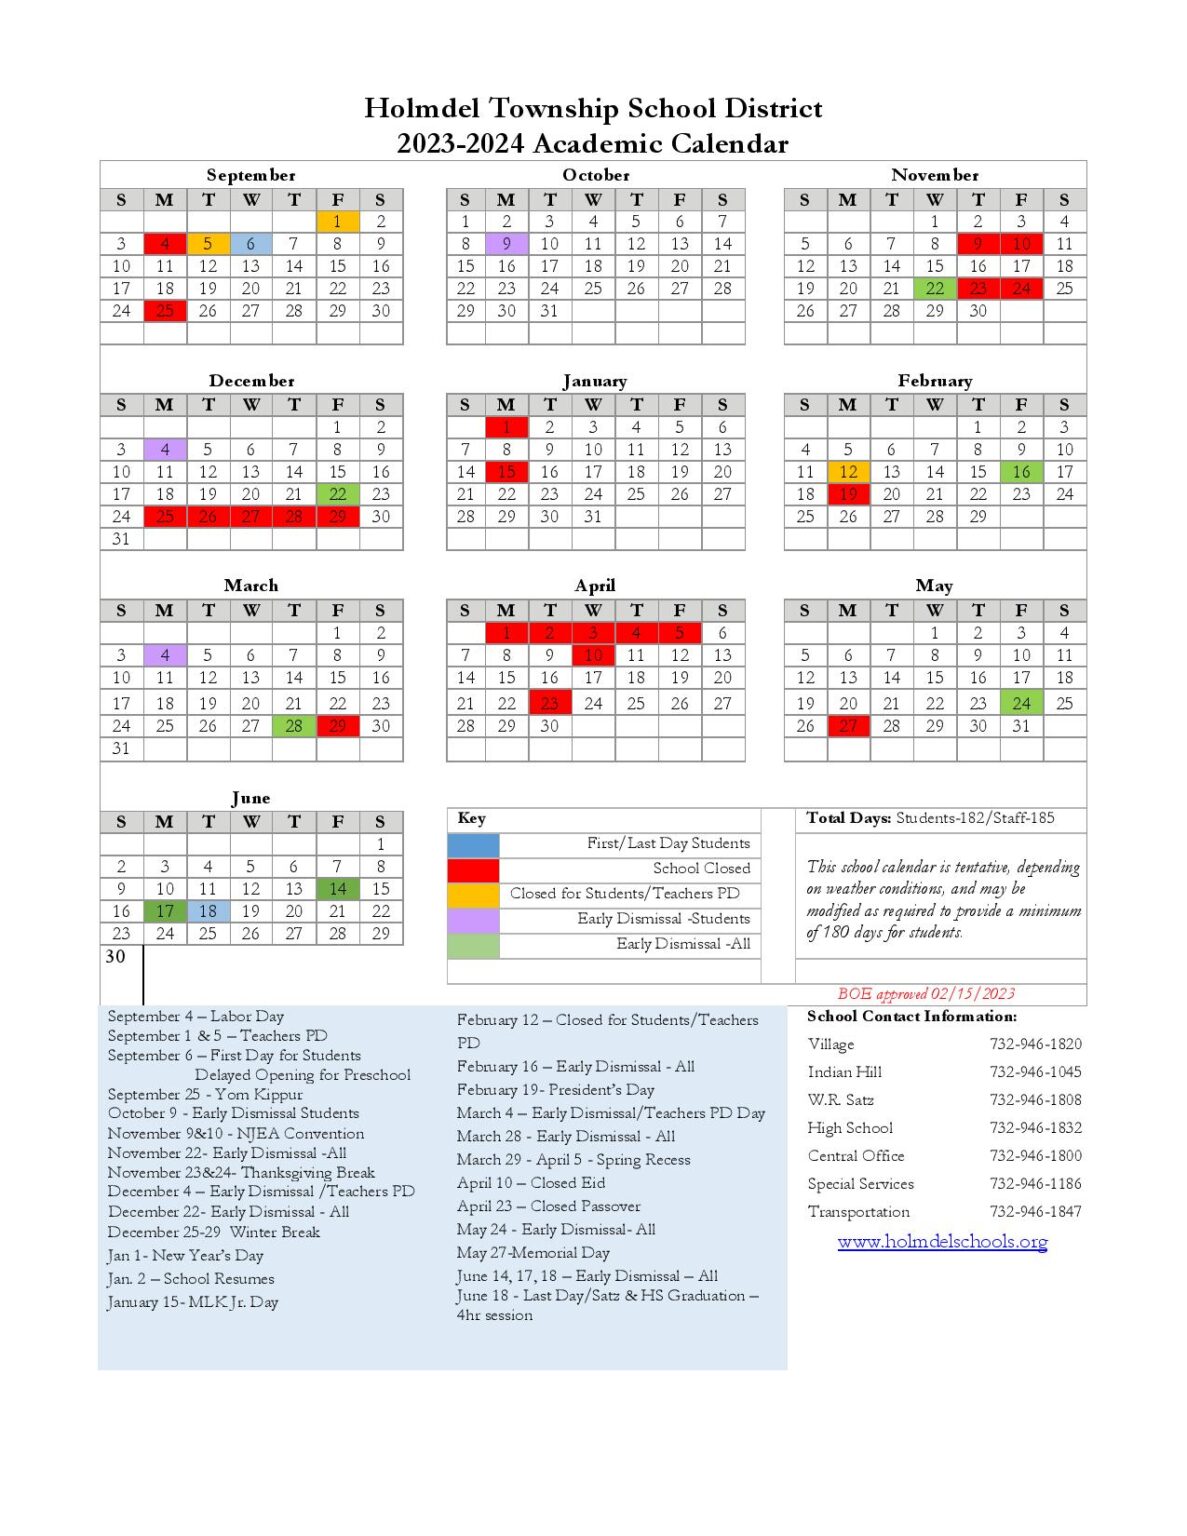 Holmdel Township Schools Calendar 2023 2024 (Academic Year)